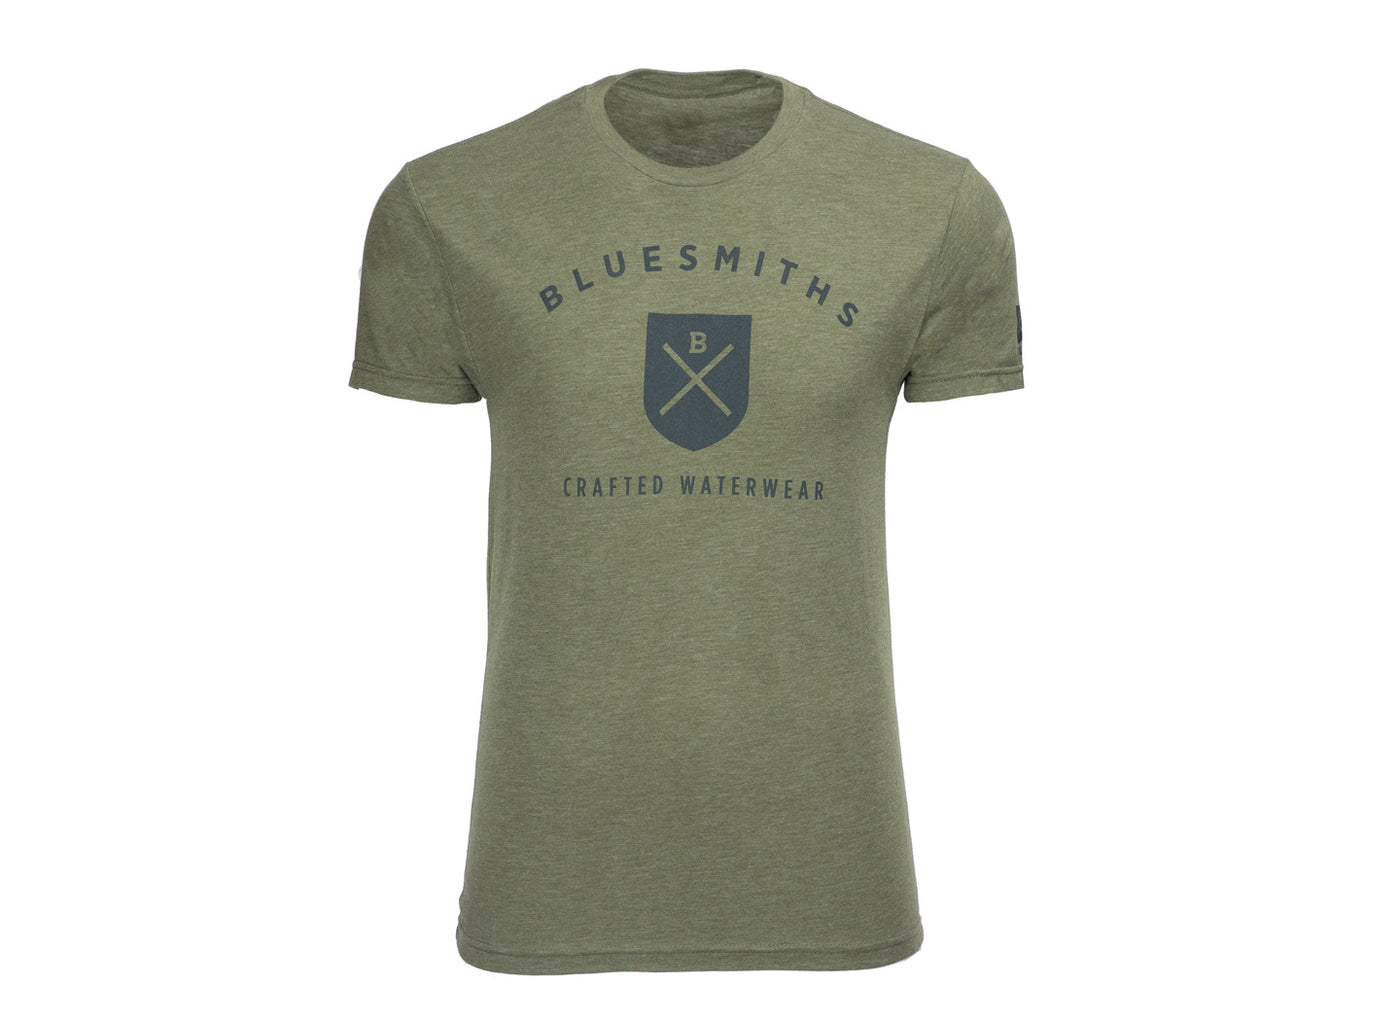 Bluesmiths Crafted Waterwear Logo Tee Shirt - Military Green